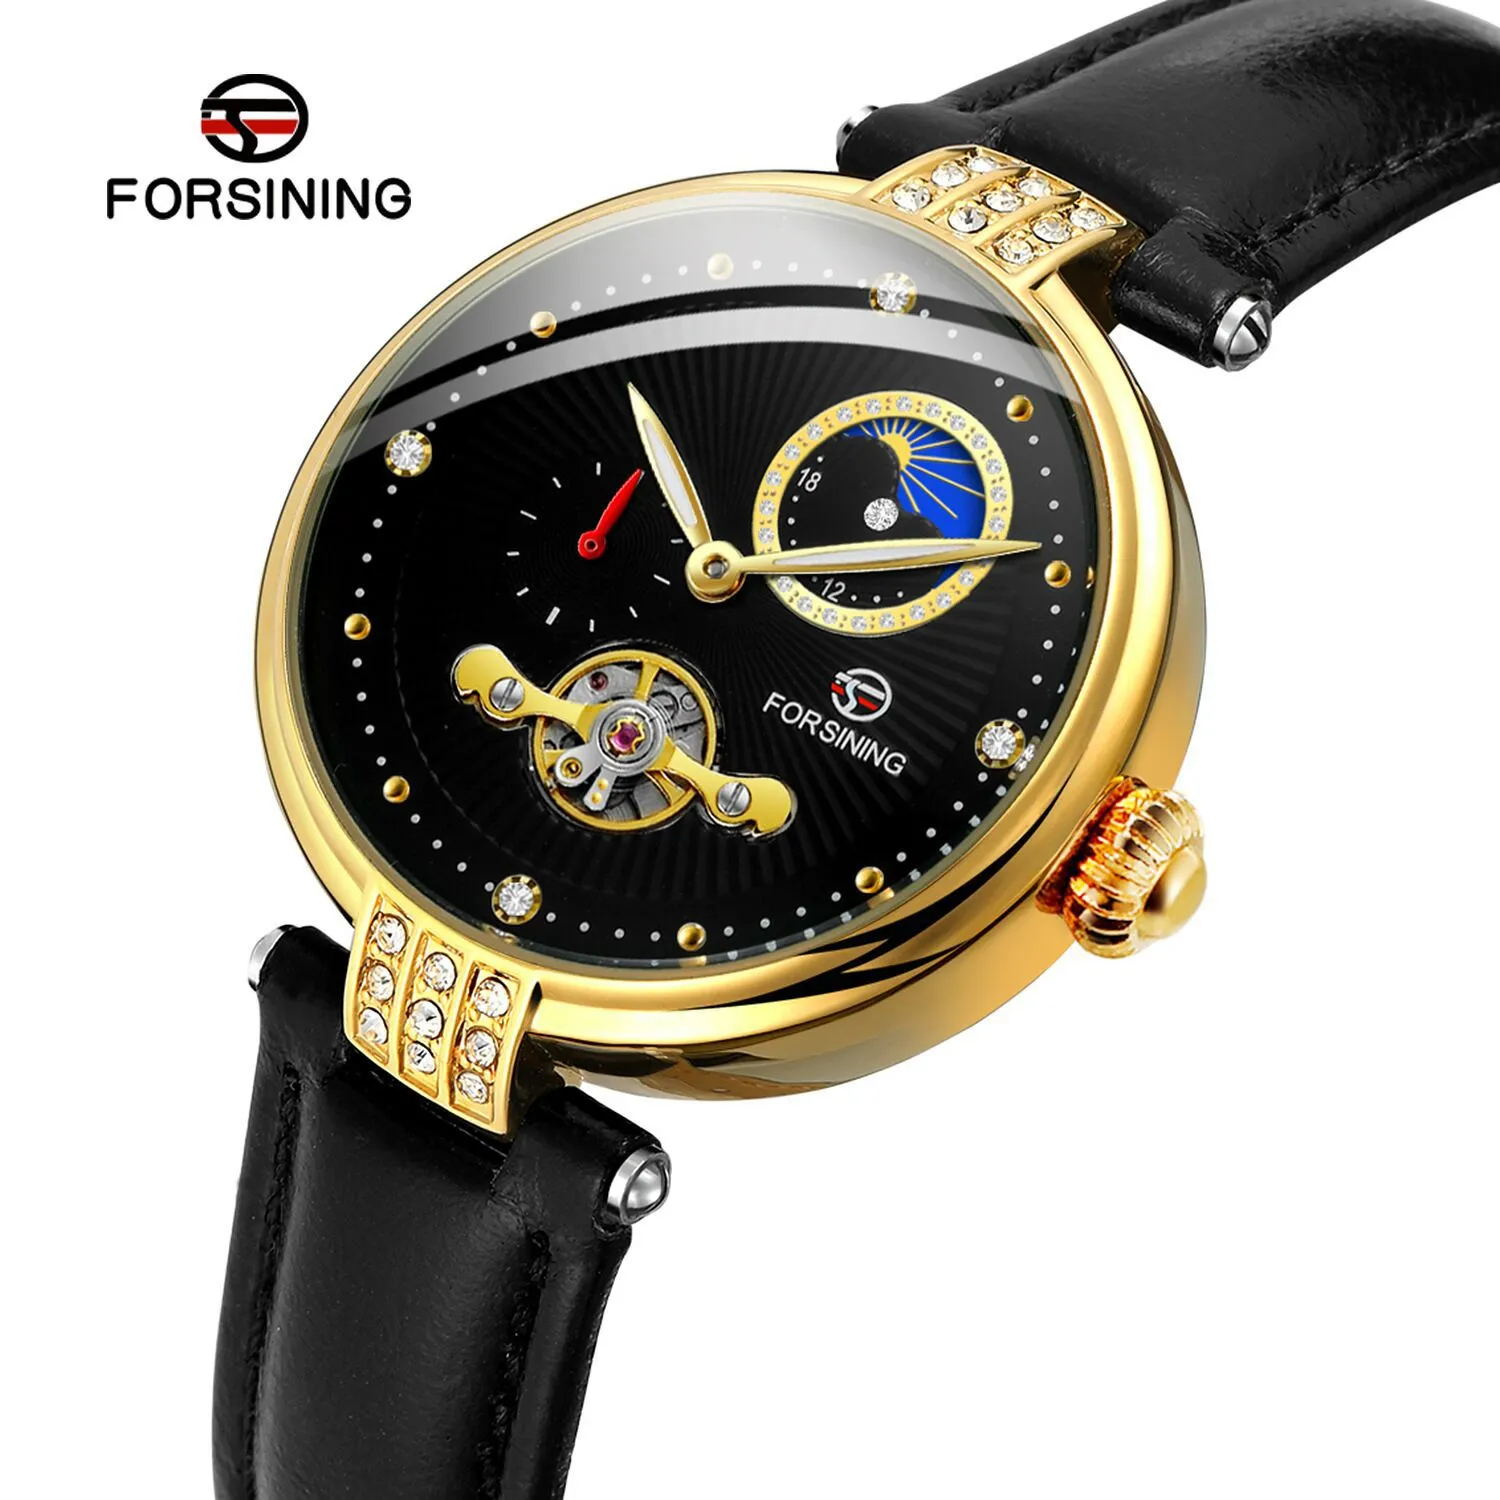 Qifusini New Womens Foreign Trade Tourbillon Hollow Automatic Belt Mechanical Watch One Piece Drop Wristwatches267f